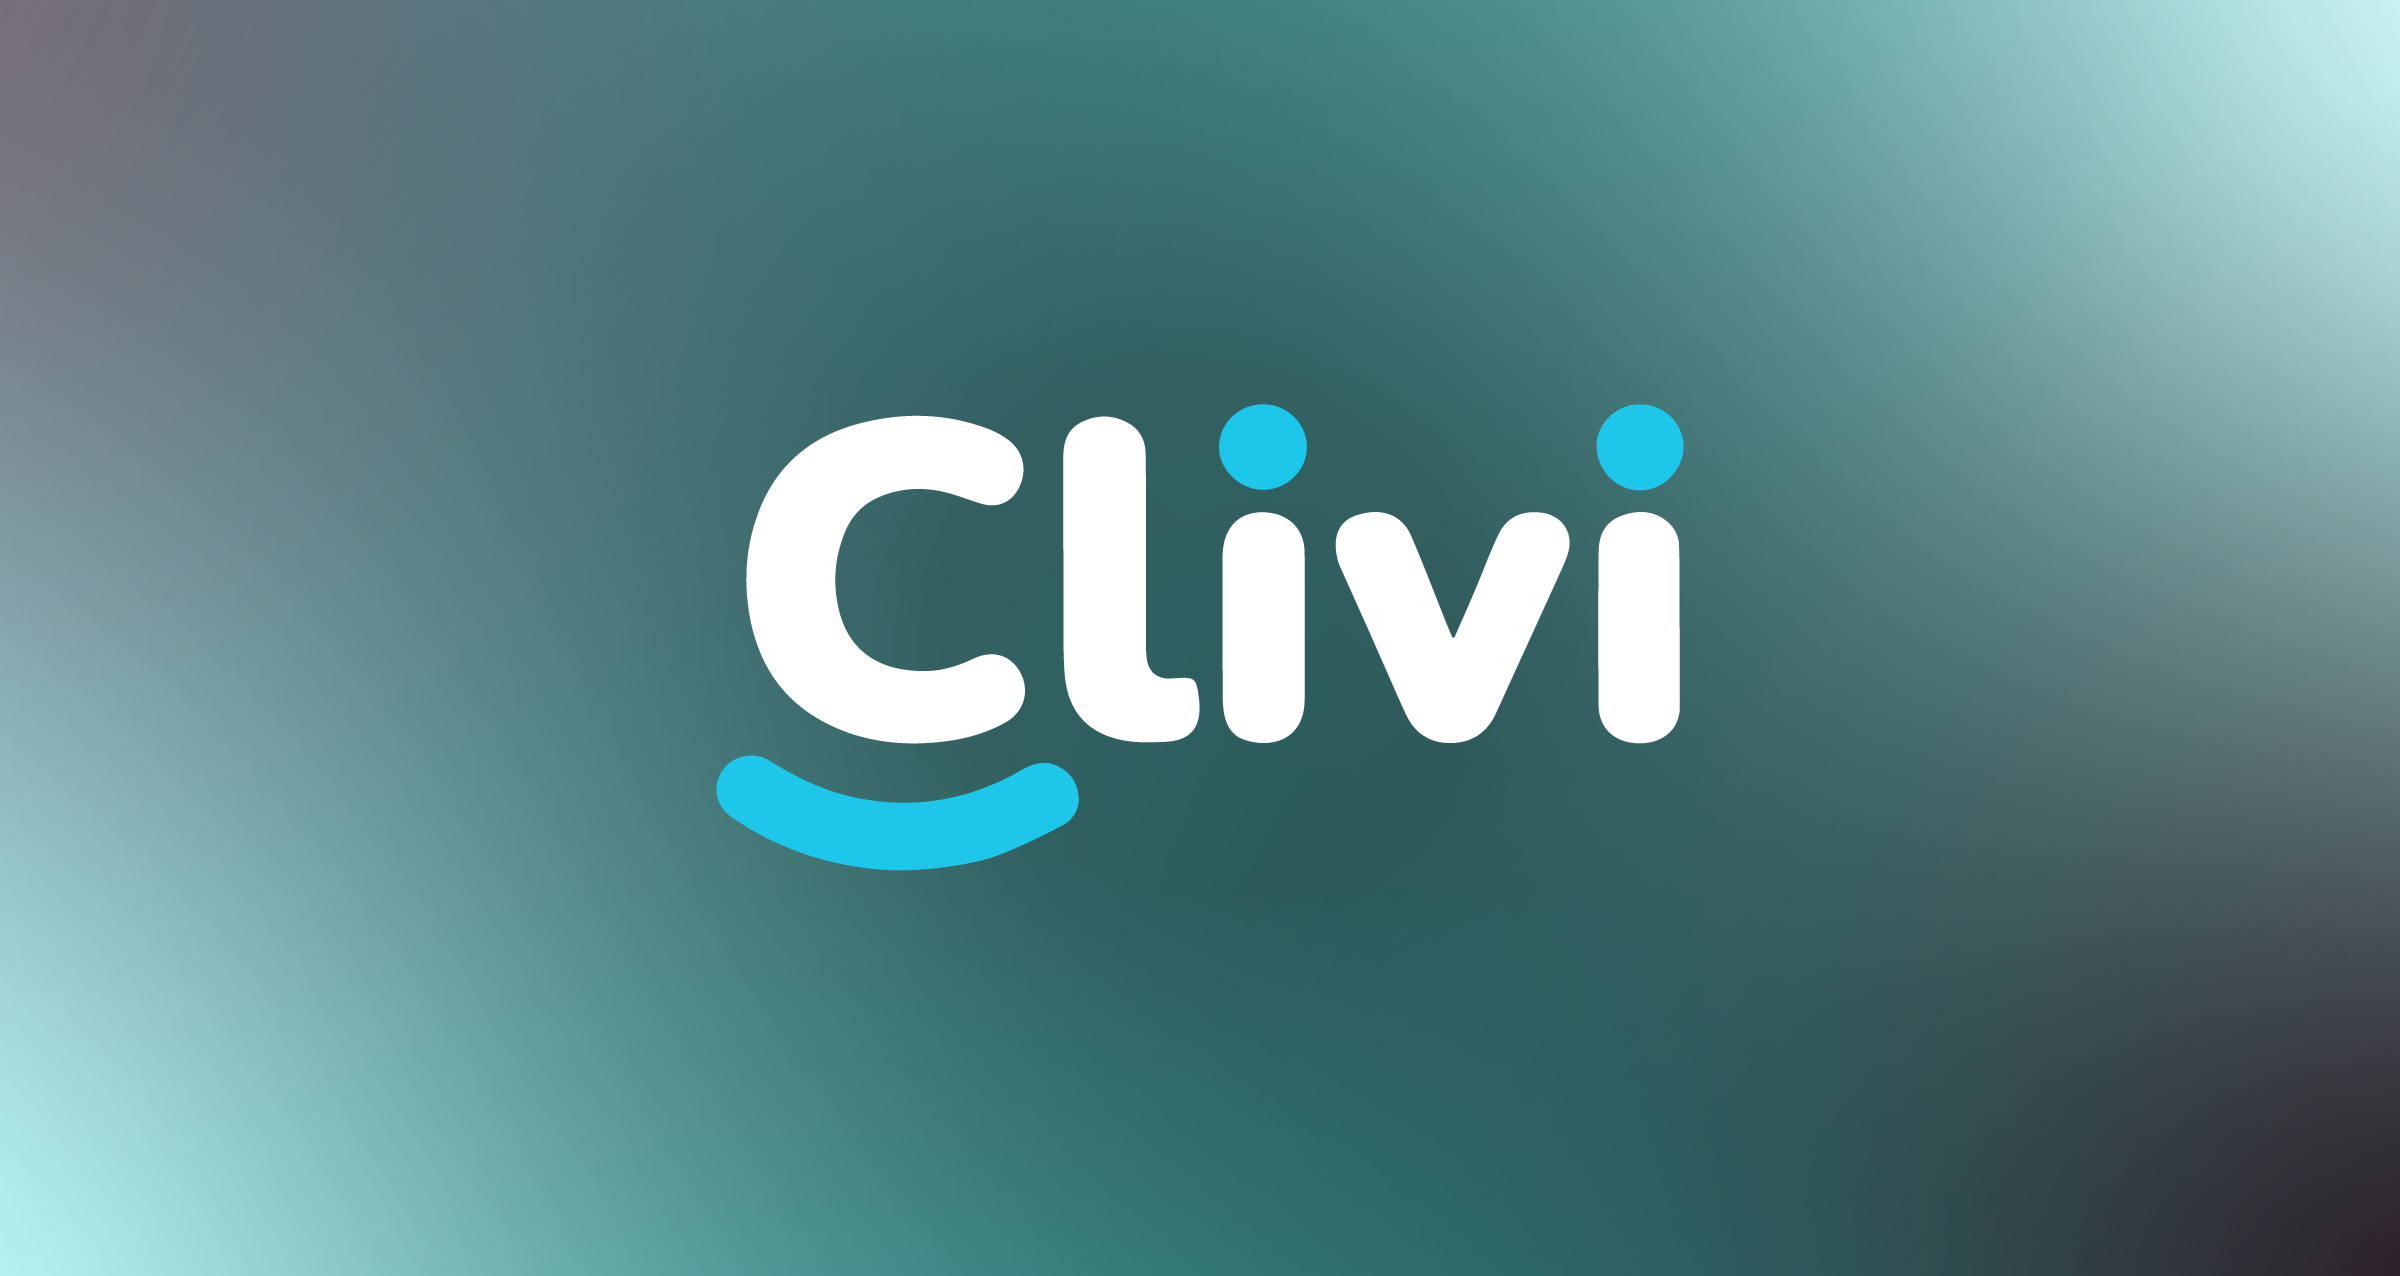 Clivi logo on gradient background